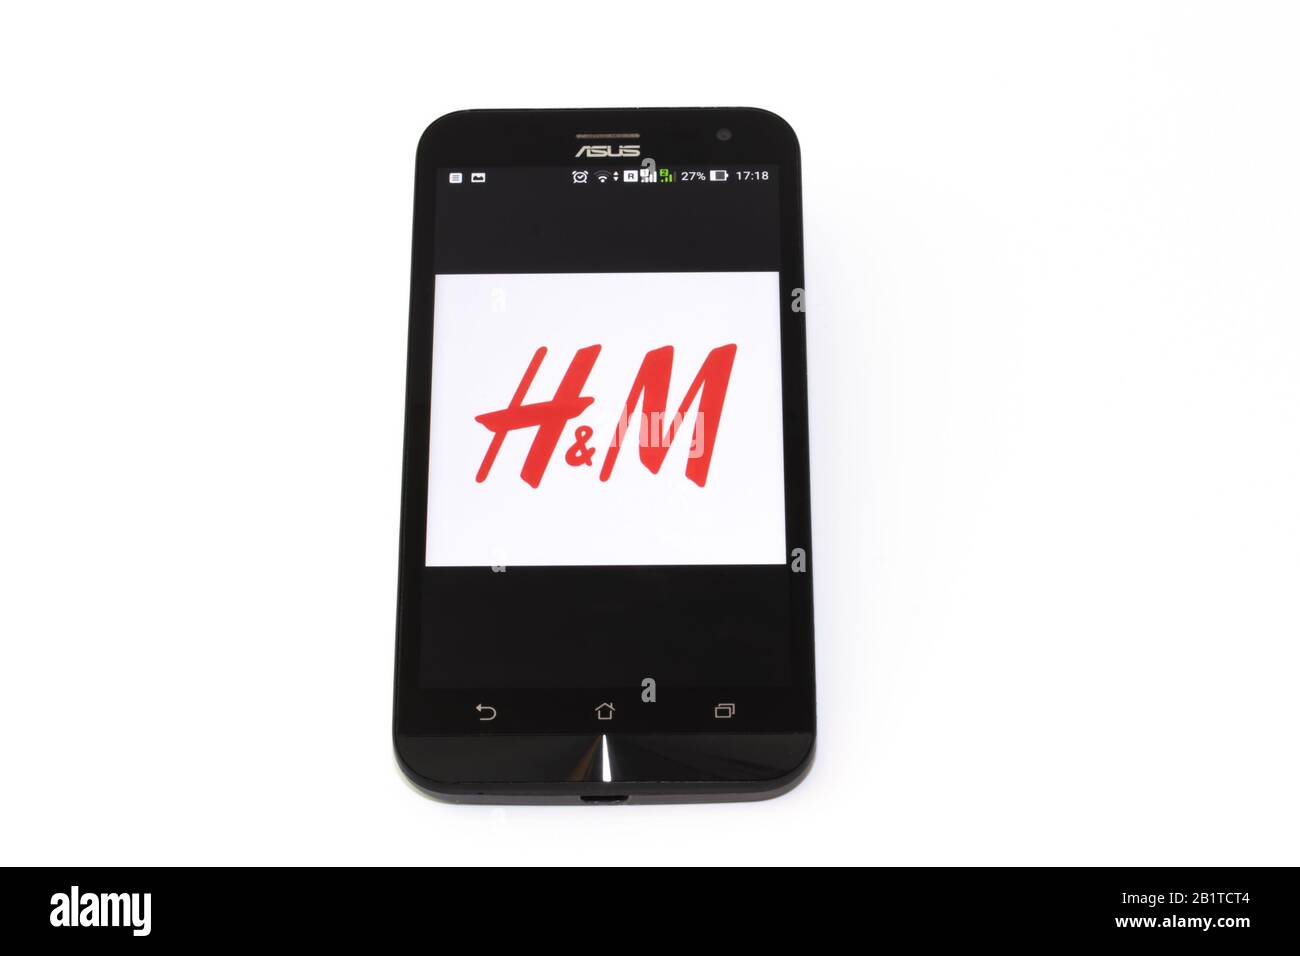 Kouvola, Finland - 23 January 2020: HM app logo on the screen of smartphone Asus Stock Photo